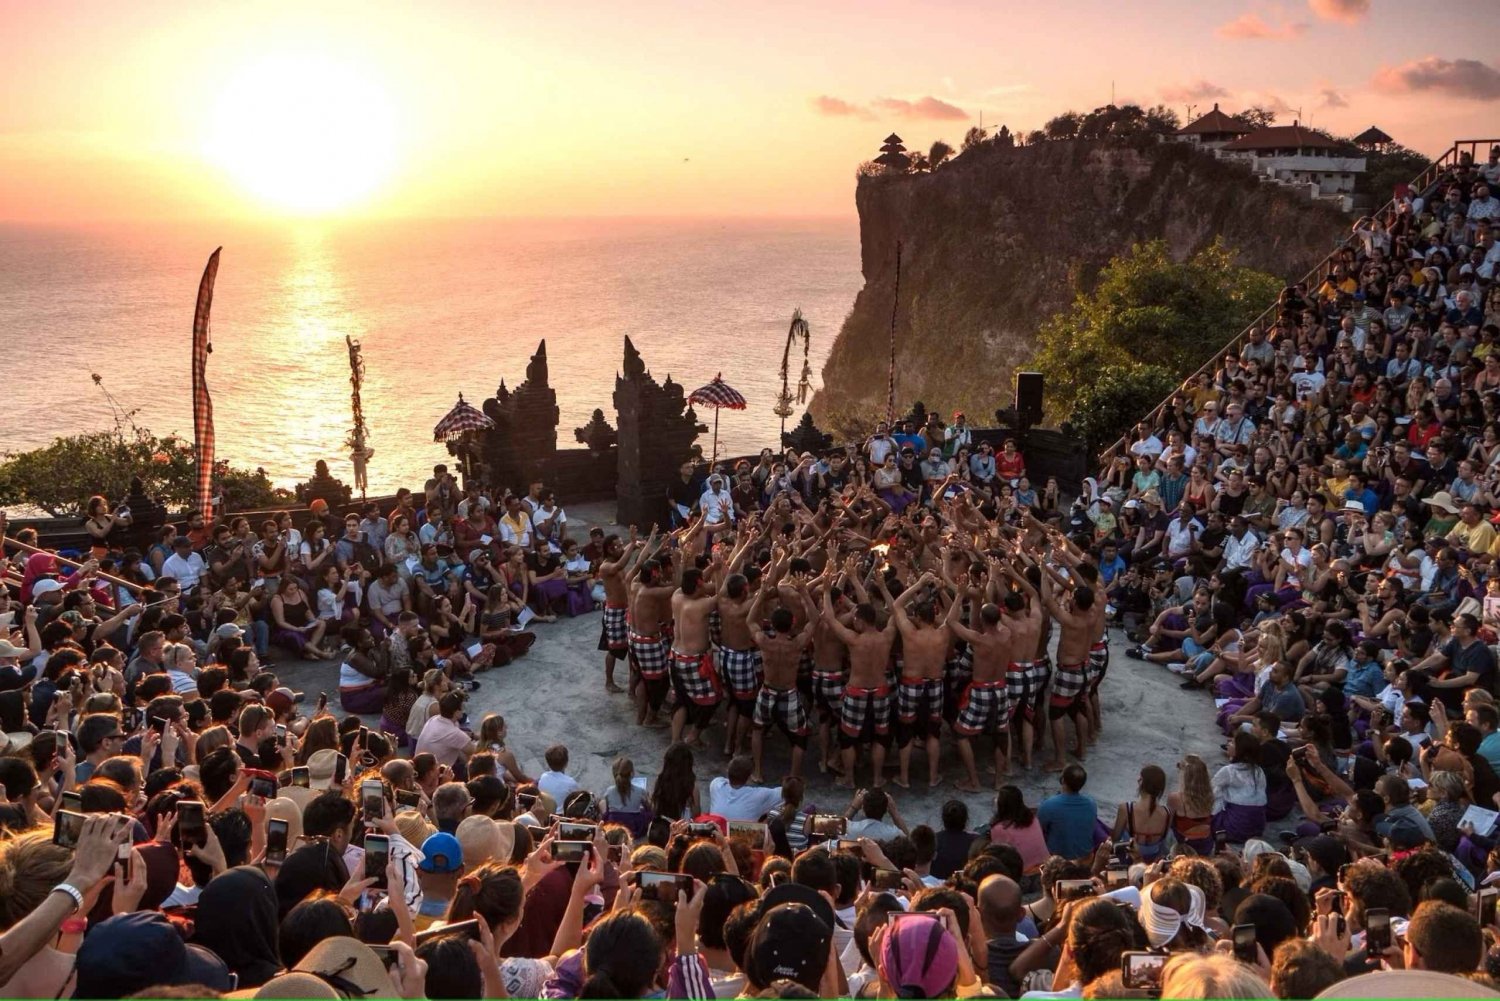 Bali: Uluwatu Sunset, Kecak Fire Dance Tours particulares